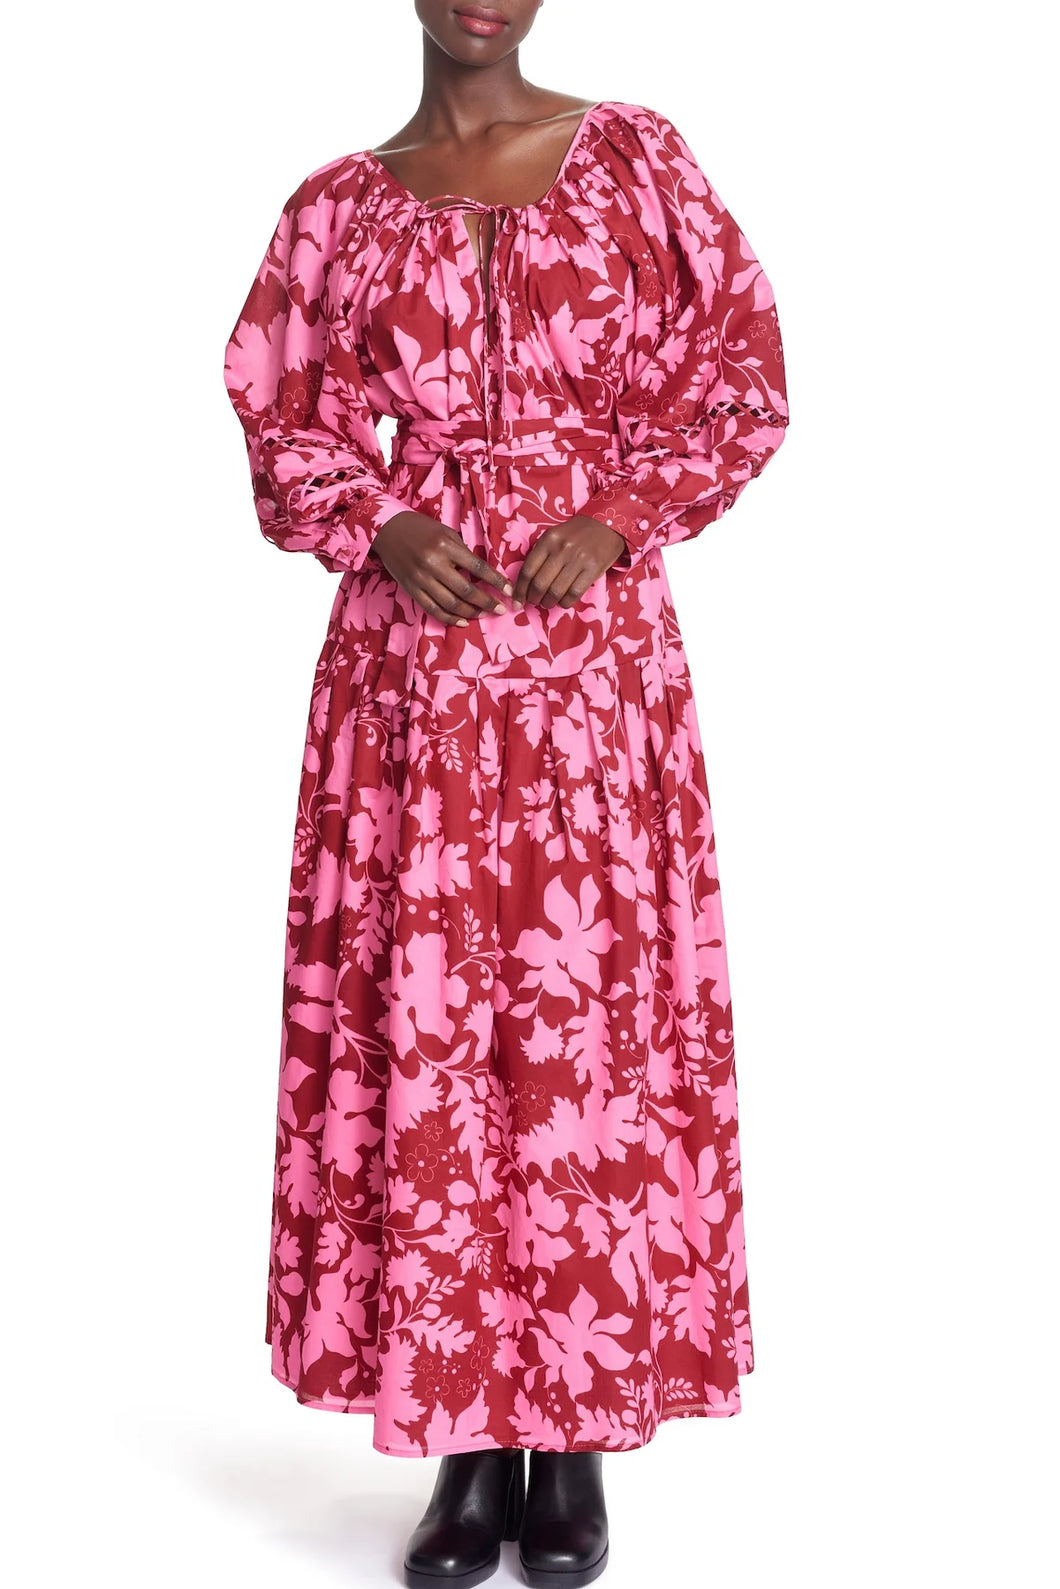 Dahlia Kenya Dress